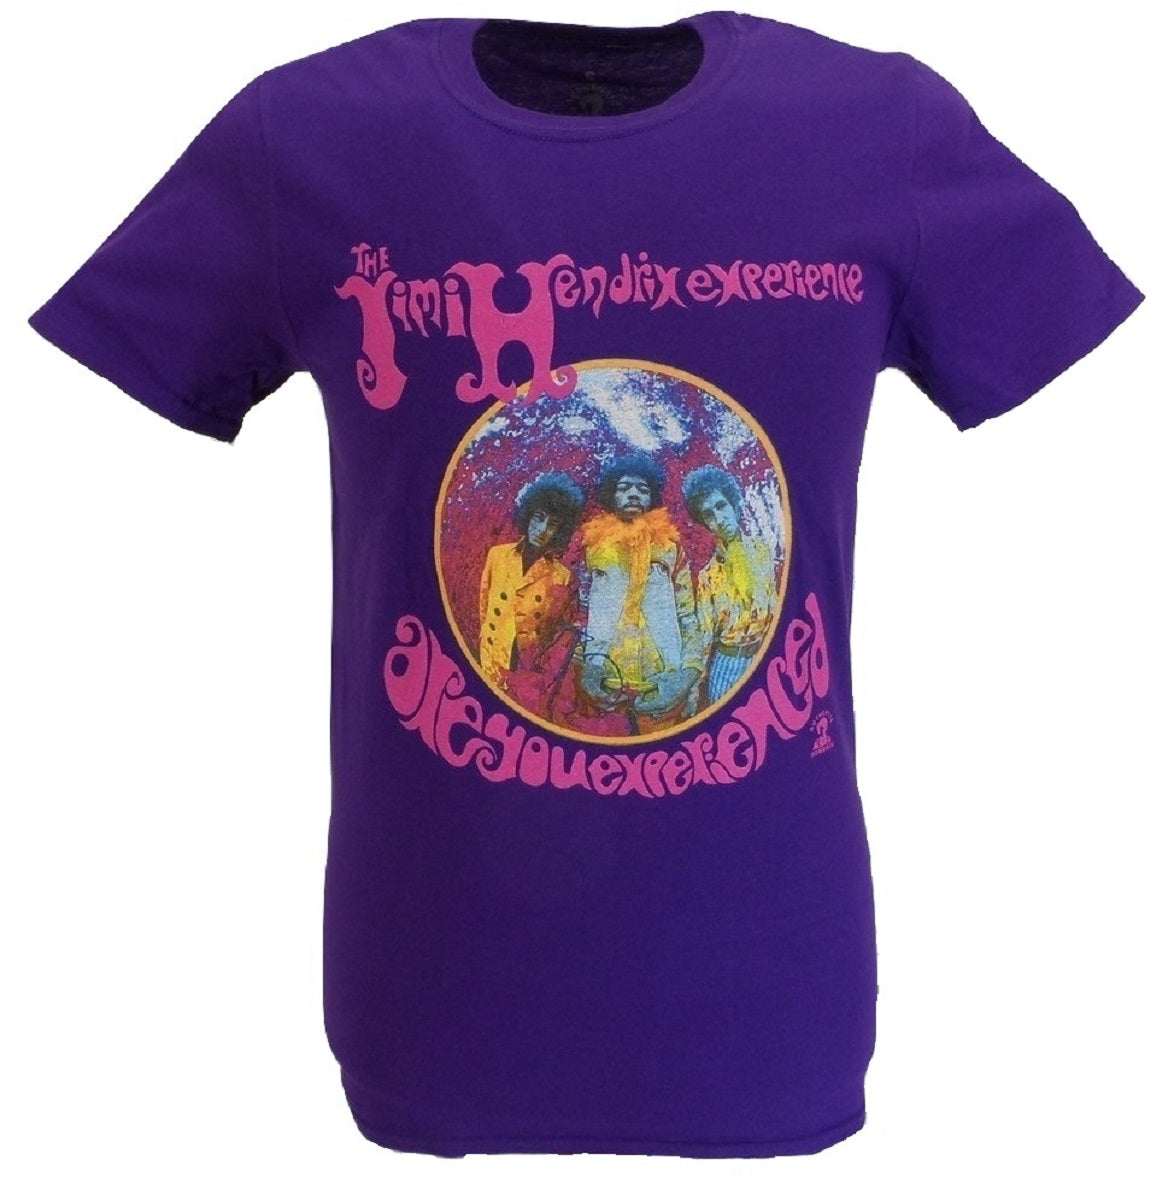 Jimi Hendrix T-Shirts & Clothing